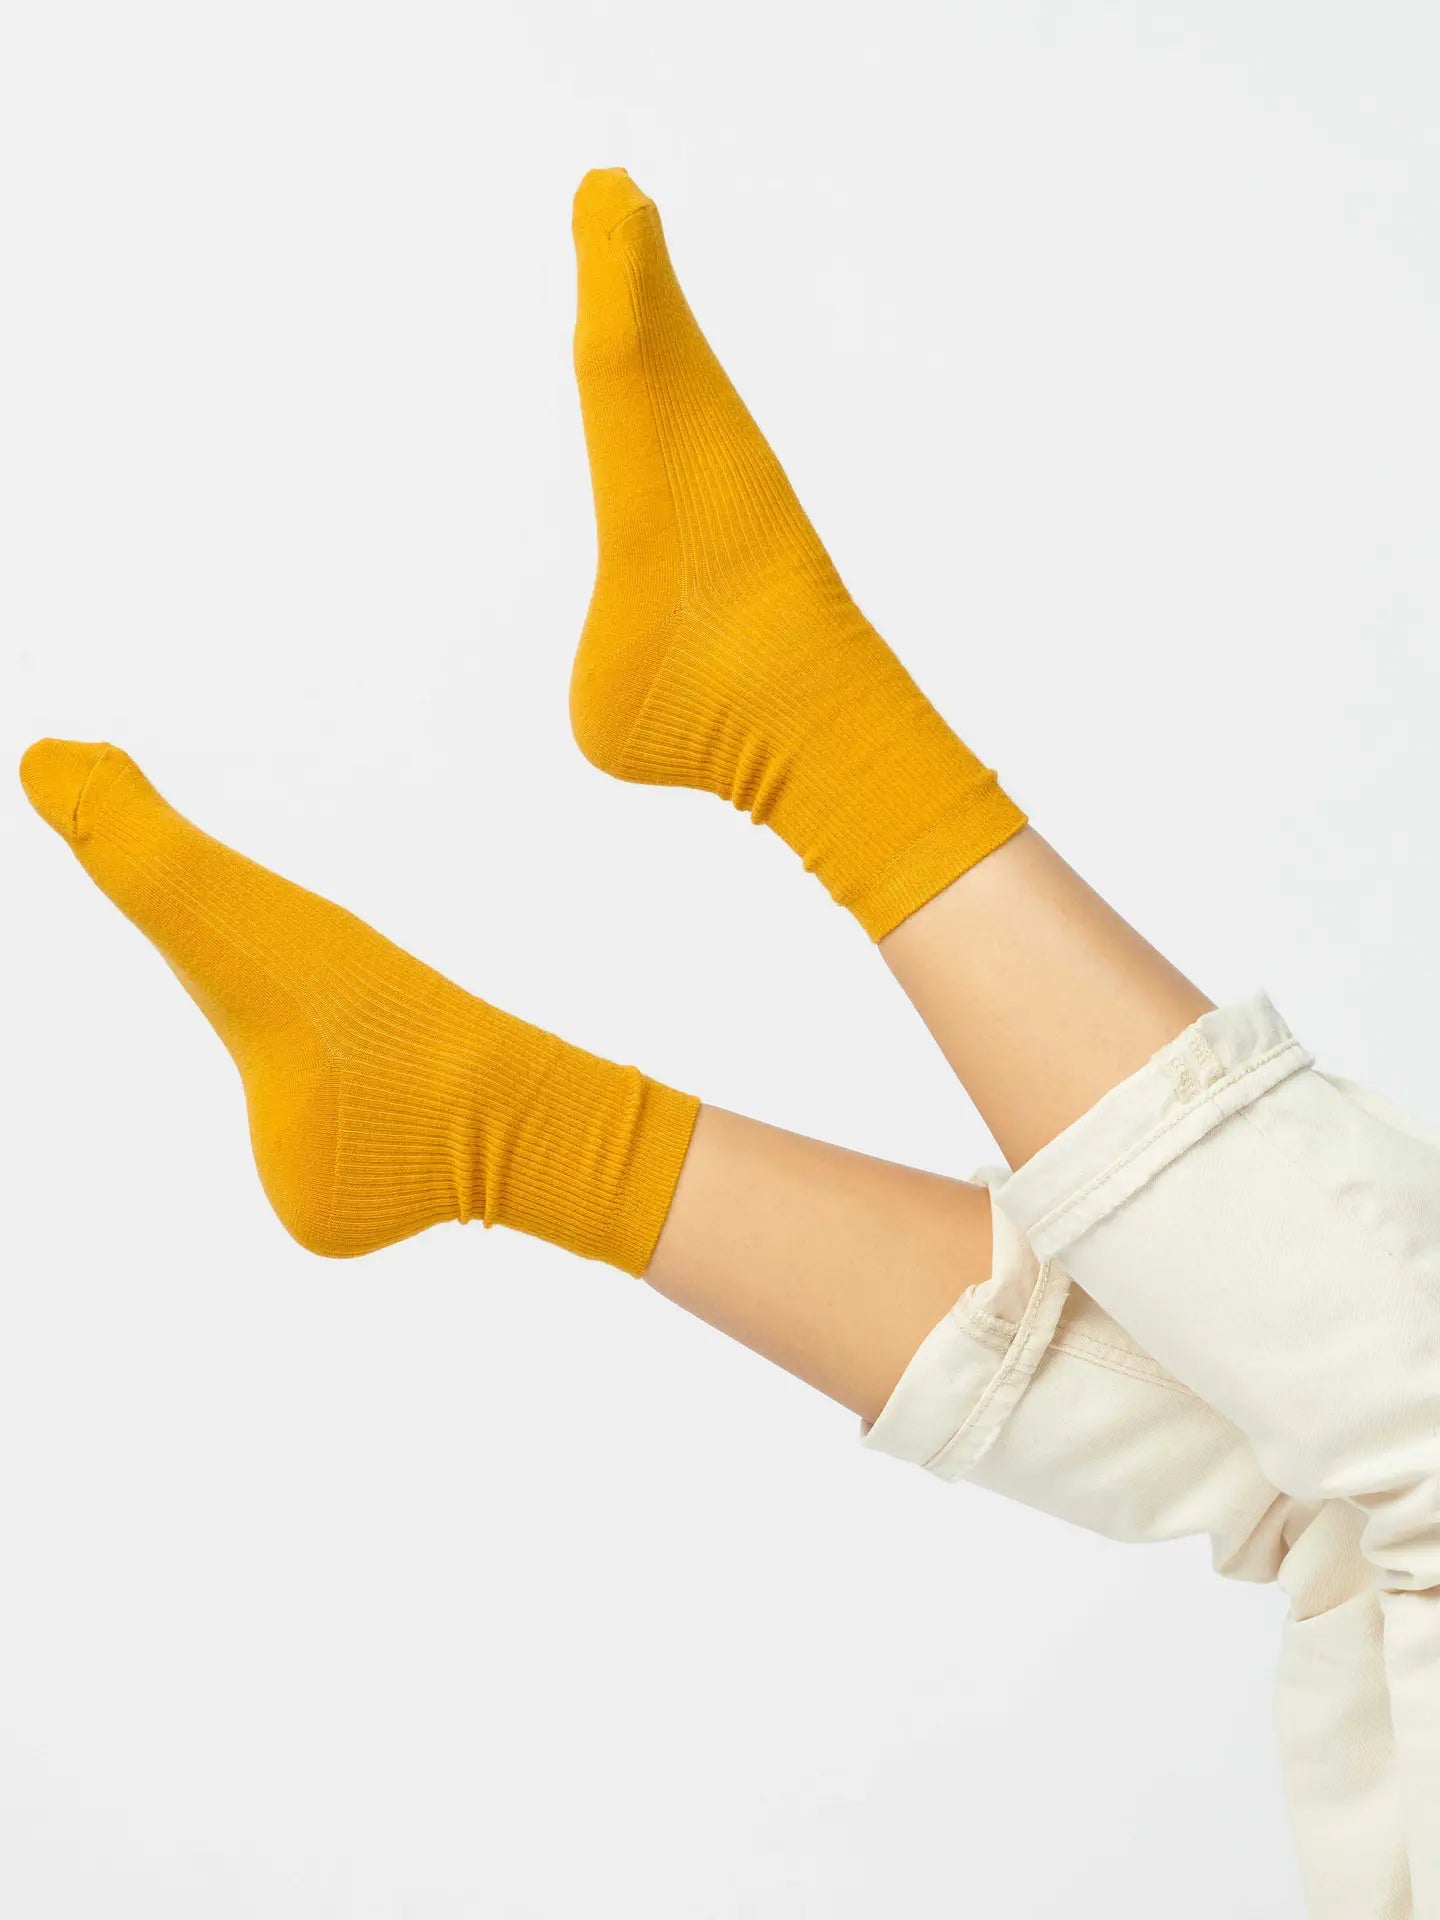 Hooray Sock Co. Merino Wool - Goldenrod